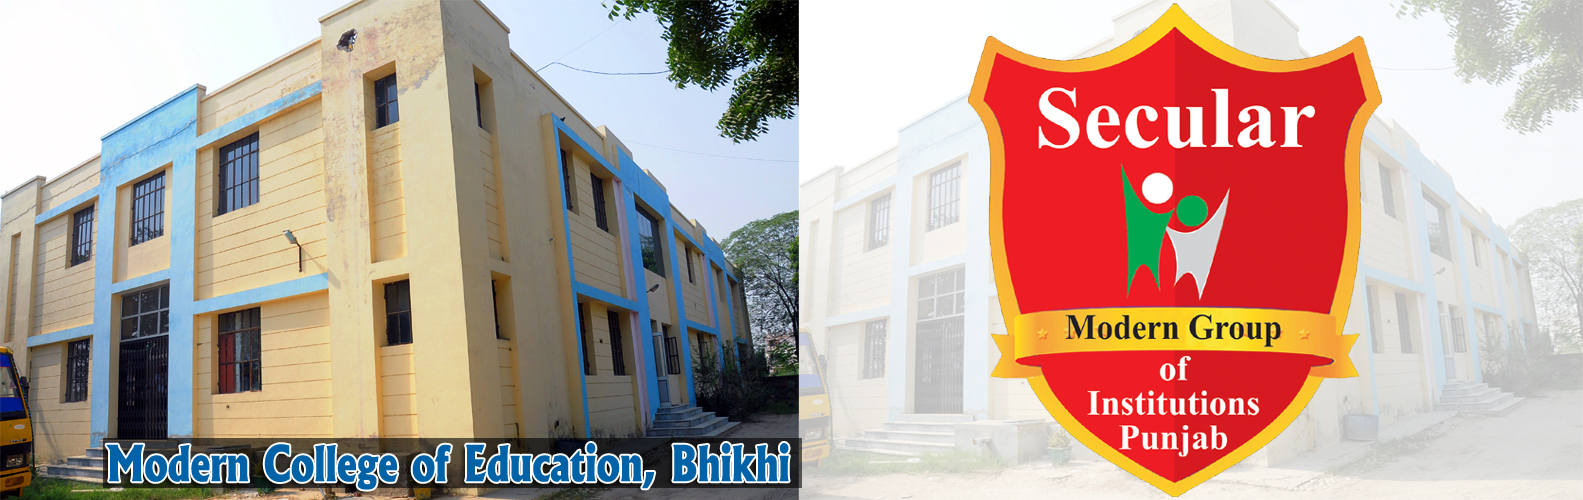 Modern College of Education, Bhikhi